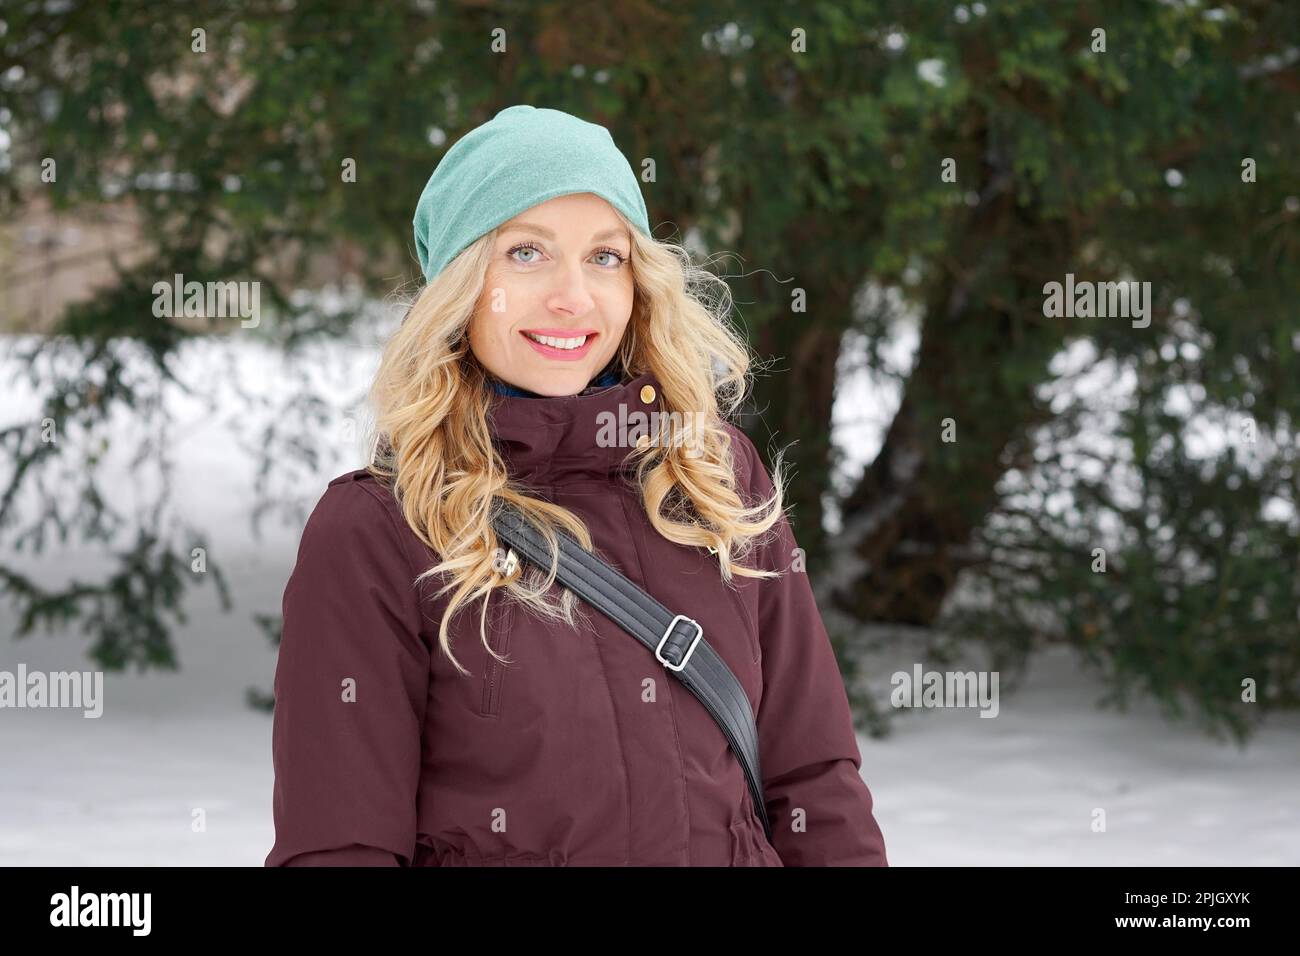 blond woman wearing warm winter fashion and woolen hat enjoying winter Stock Photo